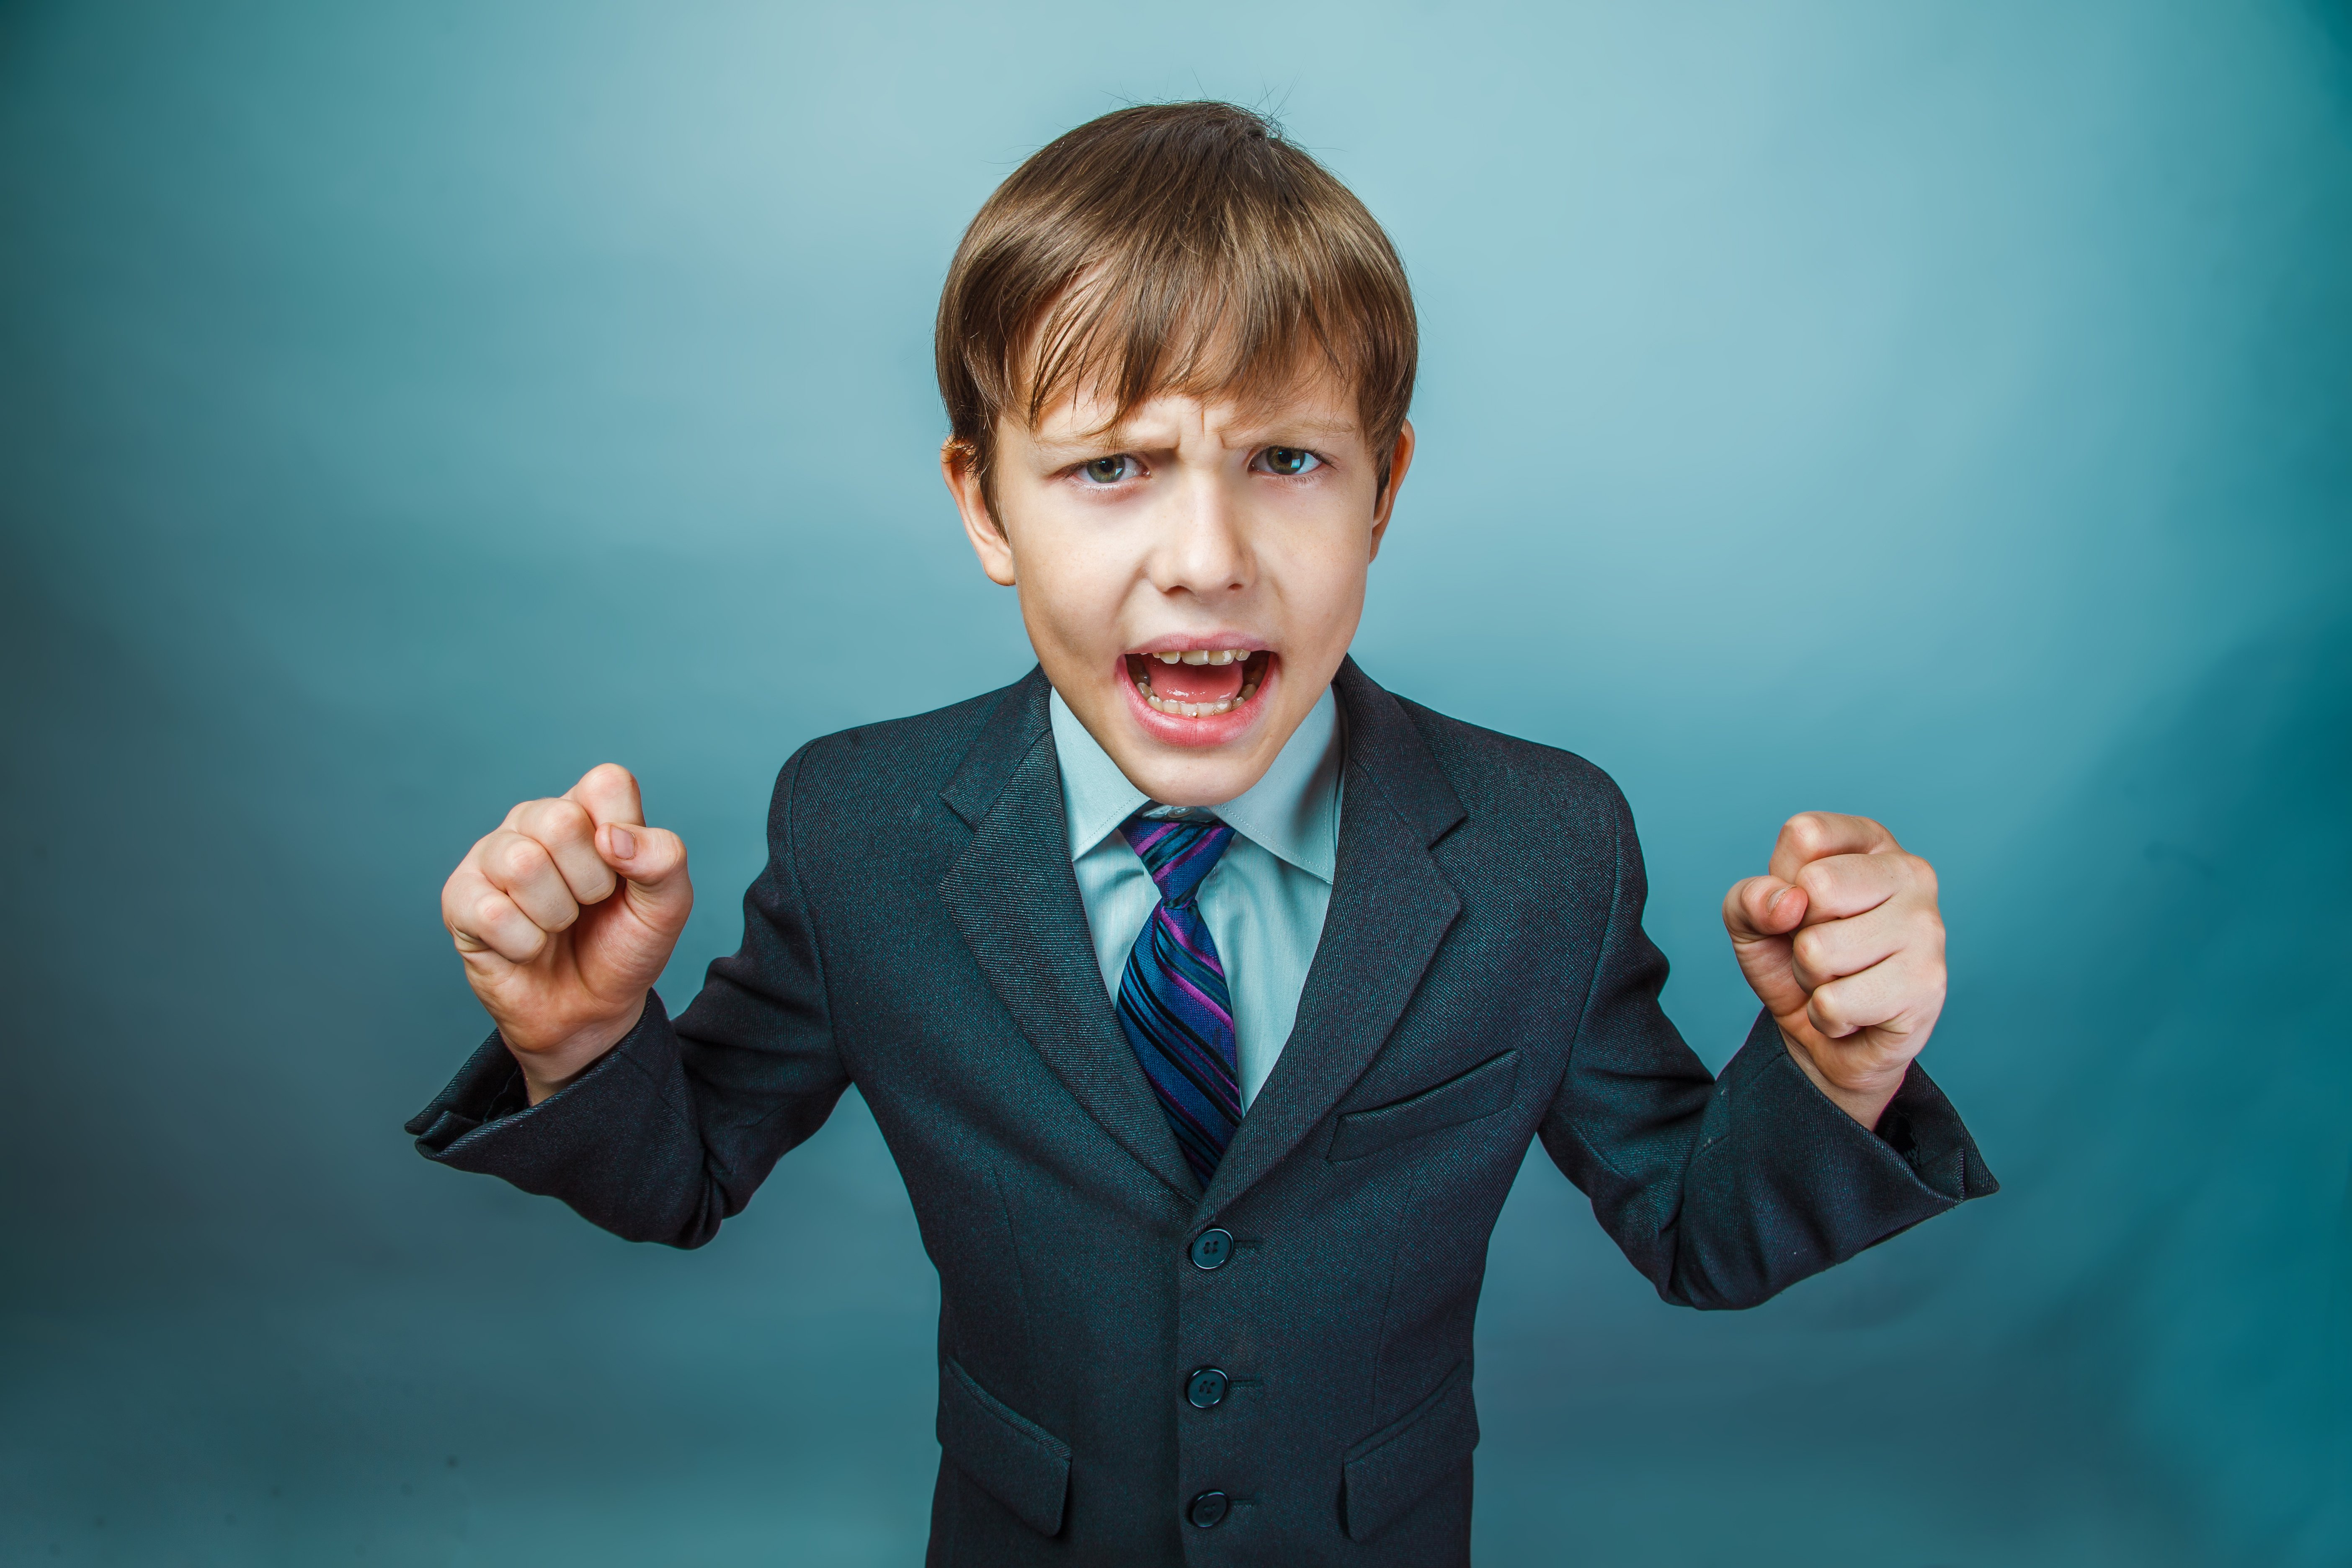 Niño furioso con traje y corbata. | Foto: Shutterstock